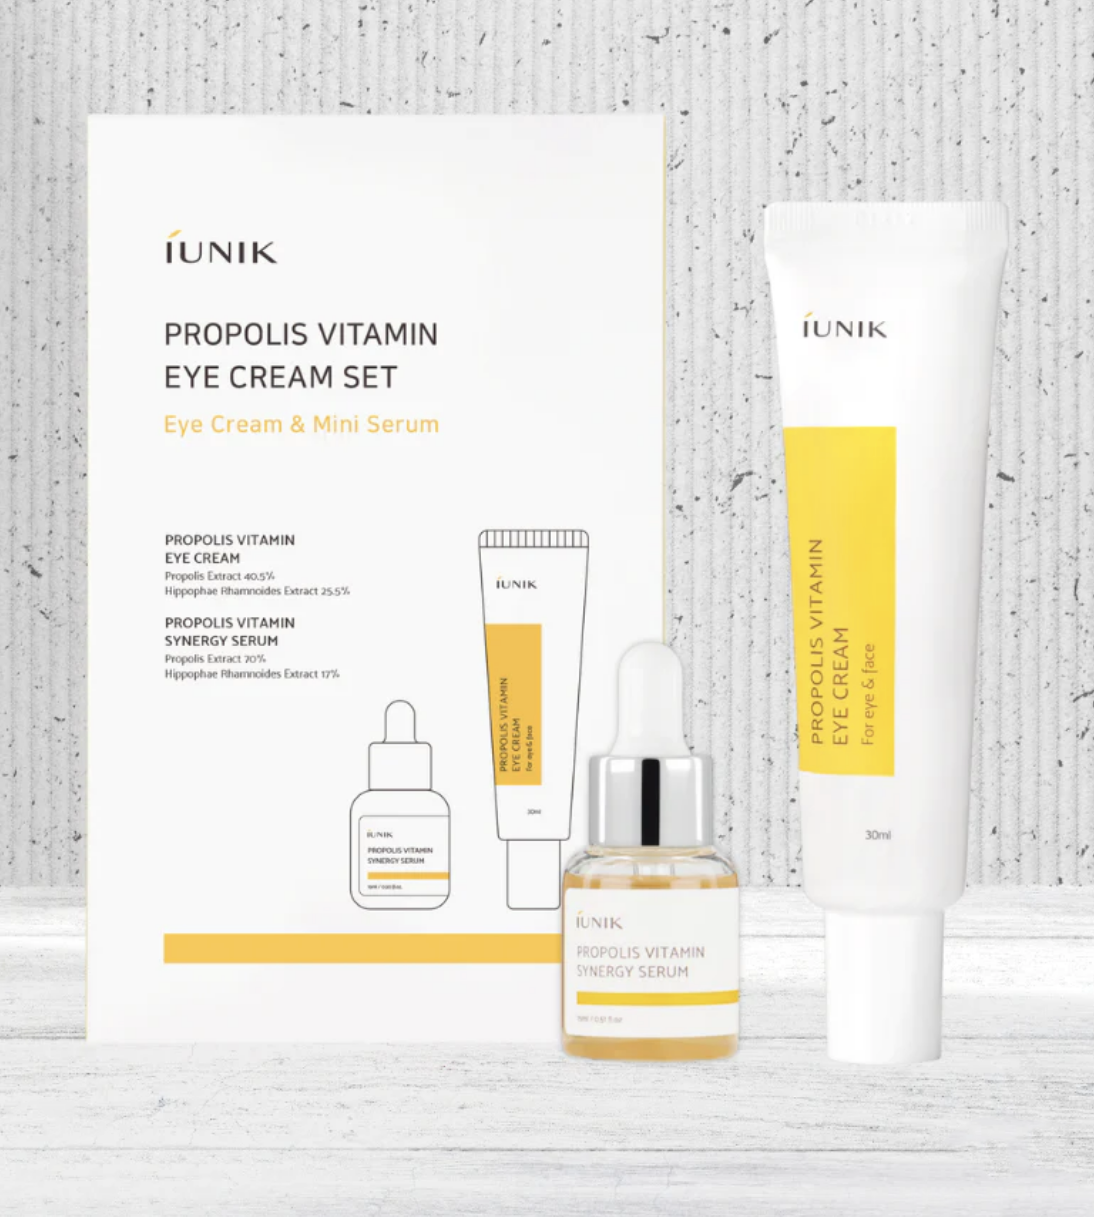 IUNIK Propolis Vitamin Eye Cream & Mini Serum Set